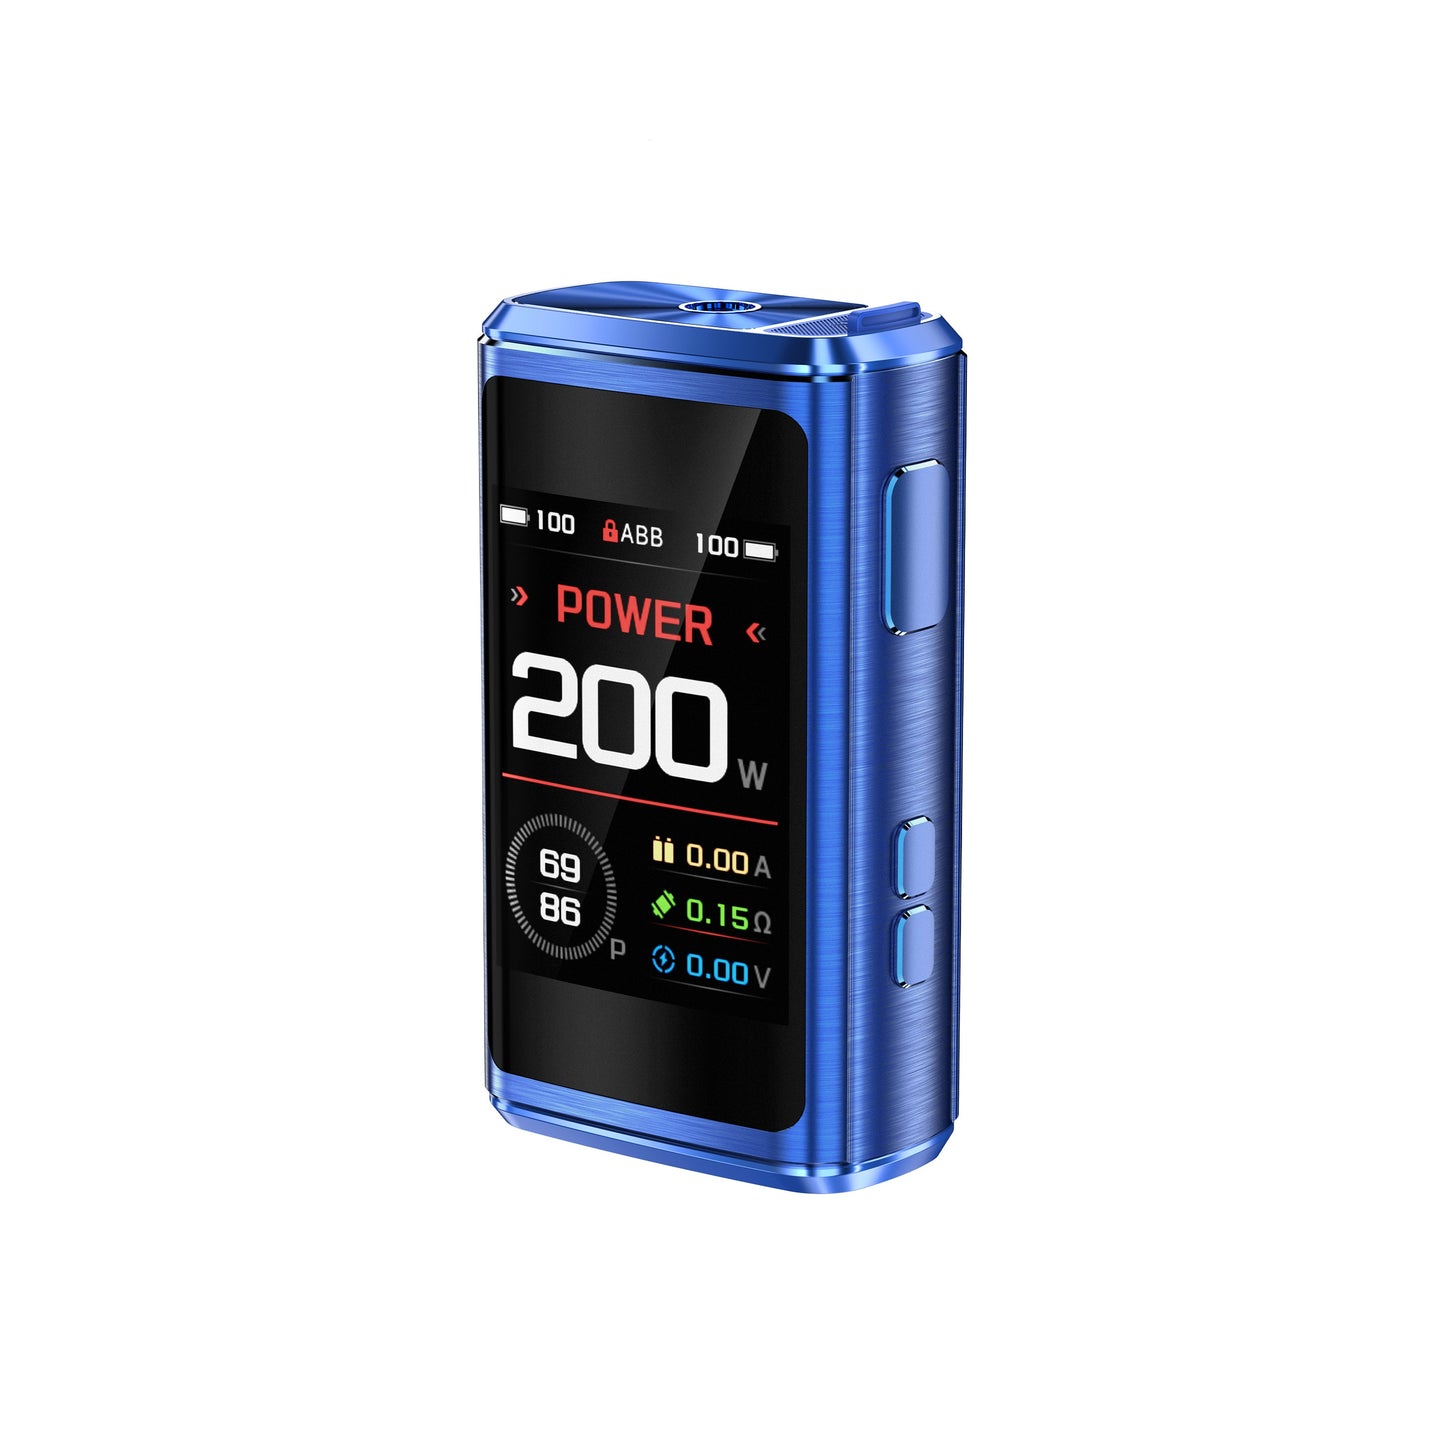 Geekvape Z200 (Zeus 200) Box Mod 200W Best Sales Price - Vape Battery